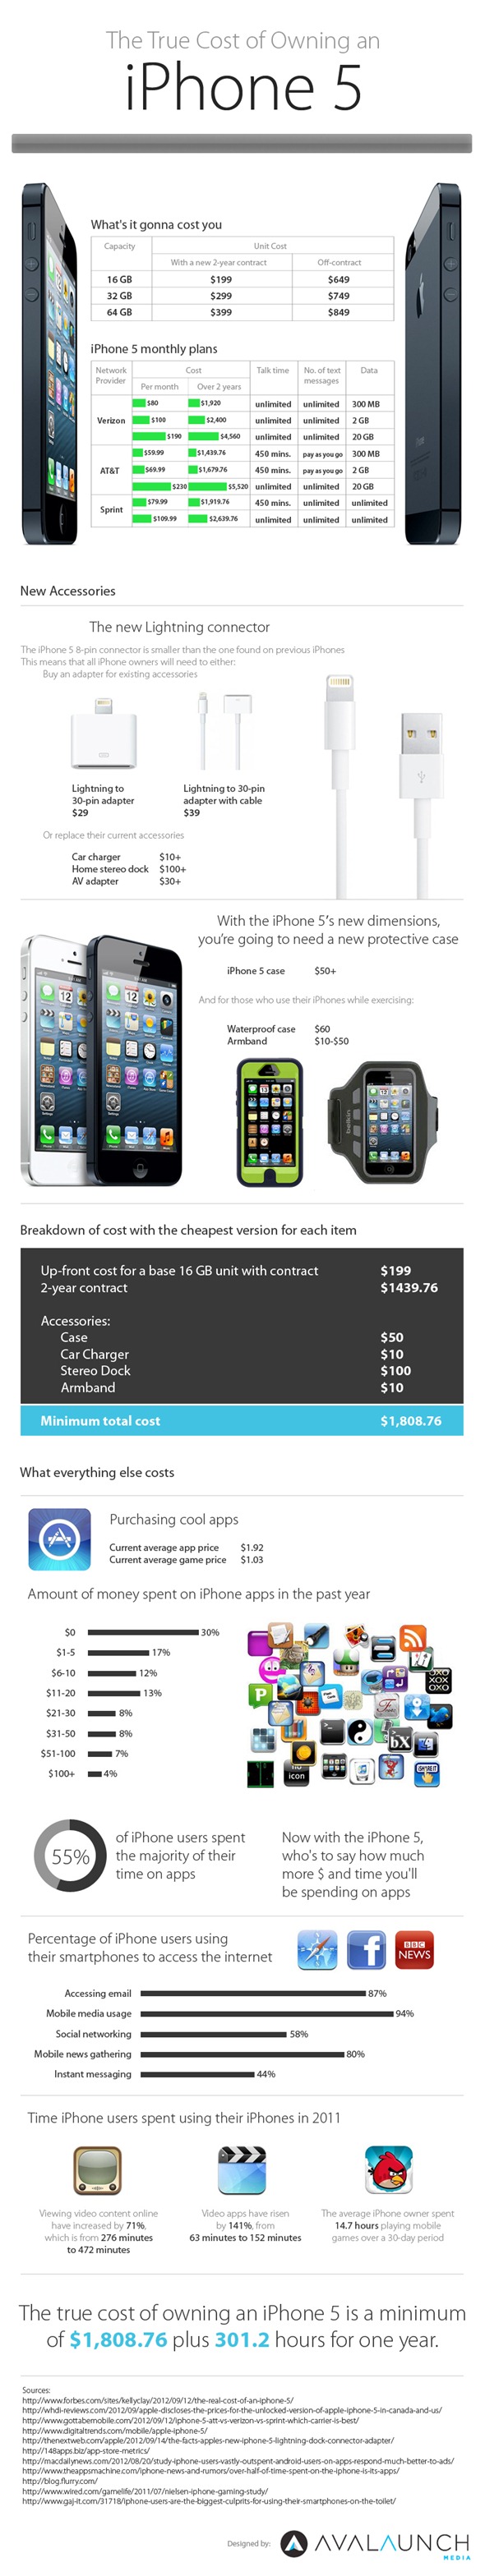 iphone5-true-cost